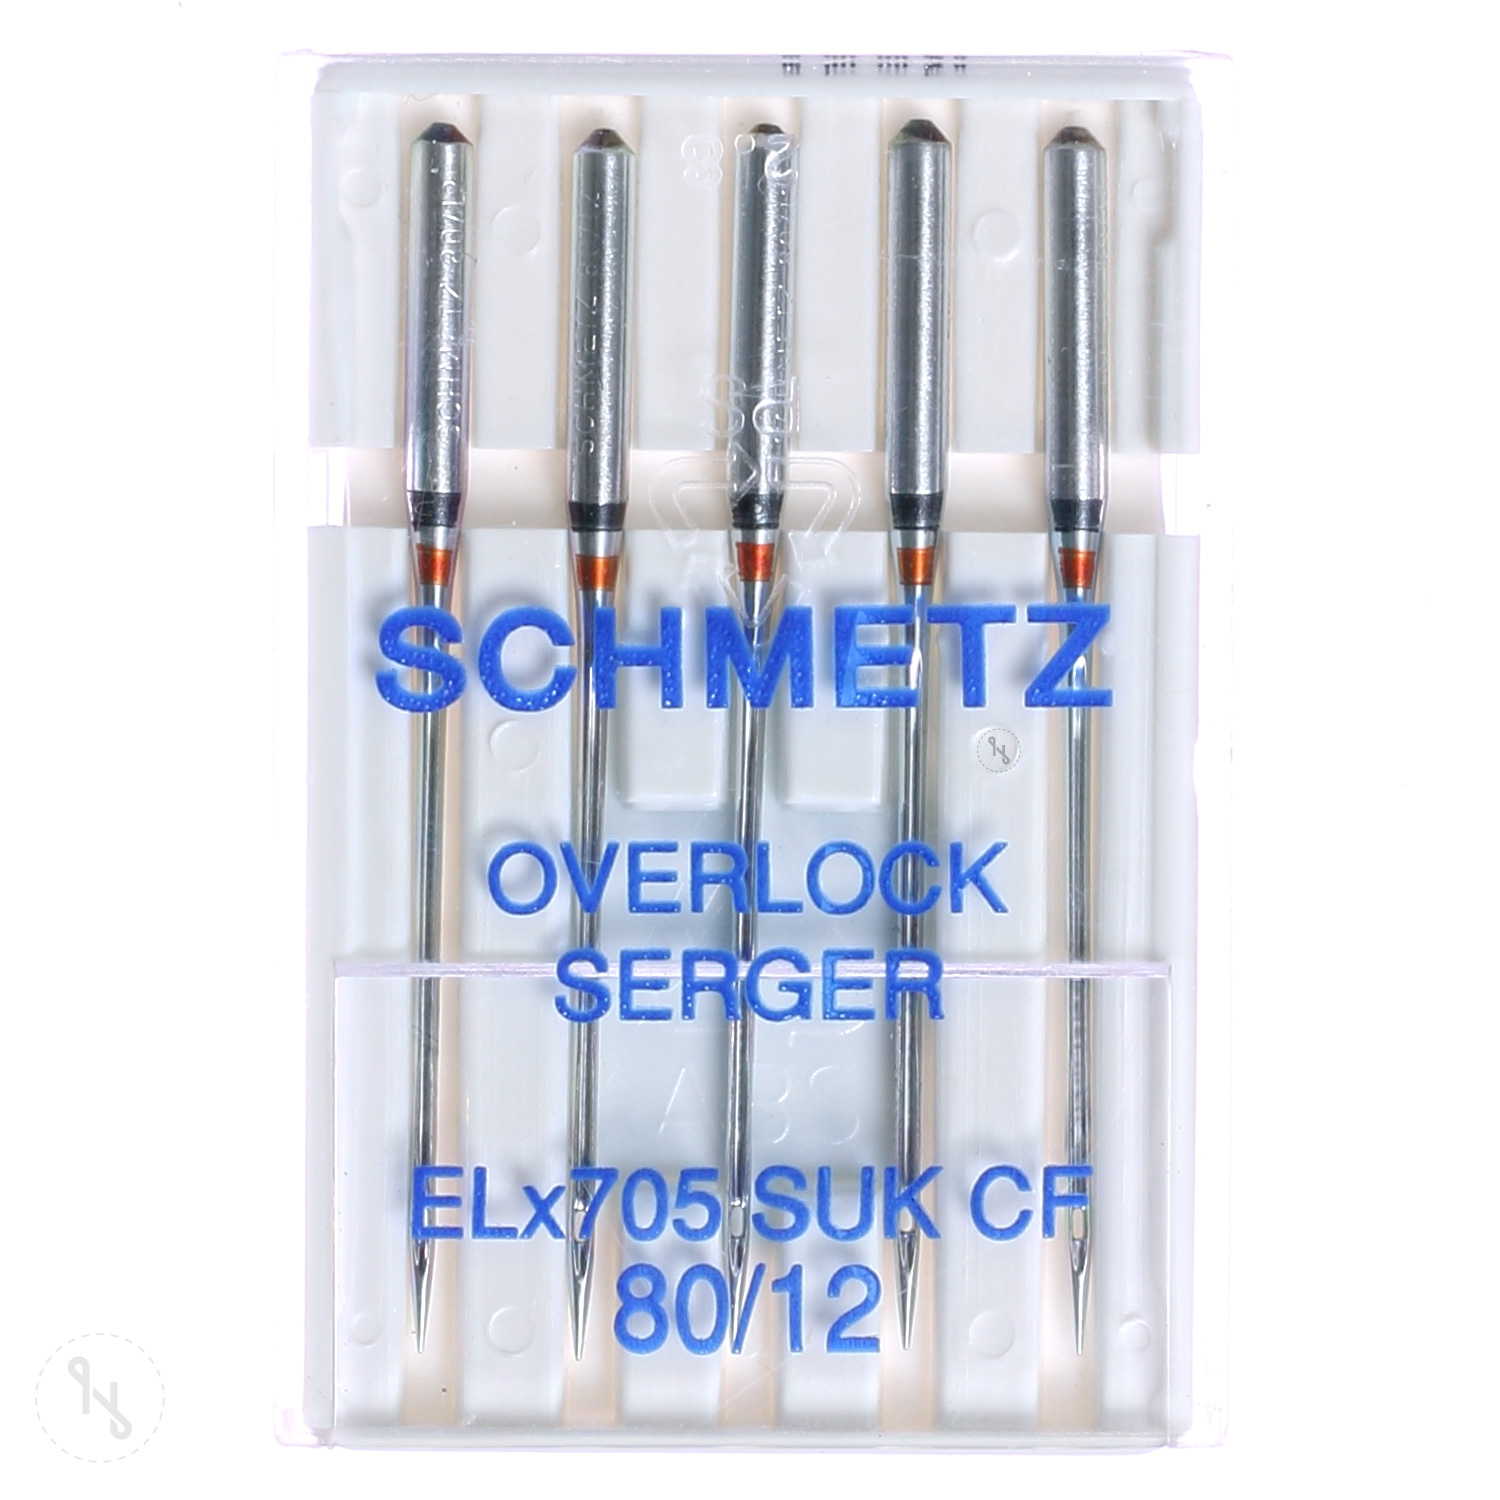 SCHMETZ Overlocknadeln ELx705 SUK CF 5er Packung